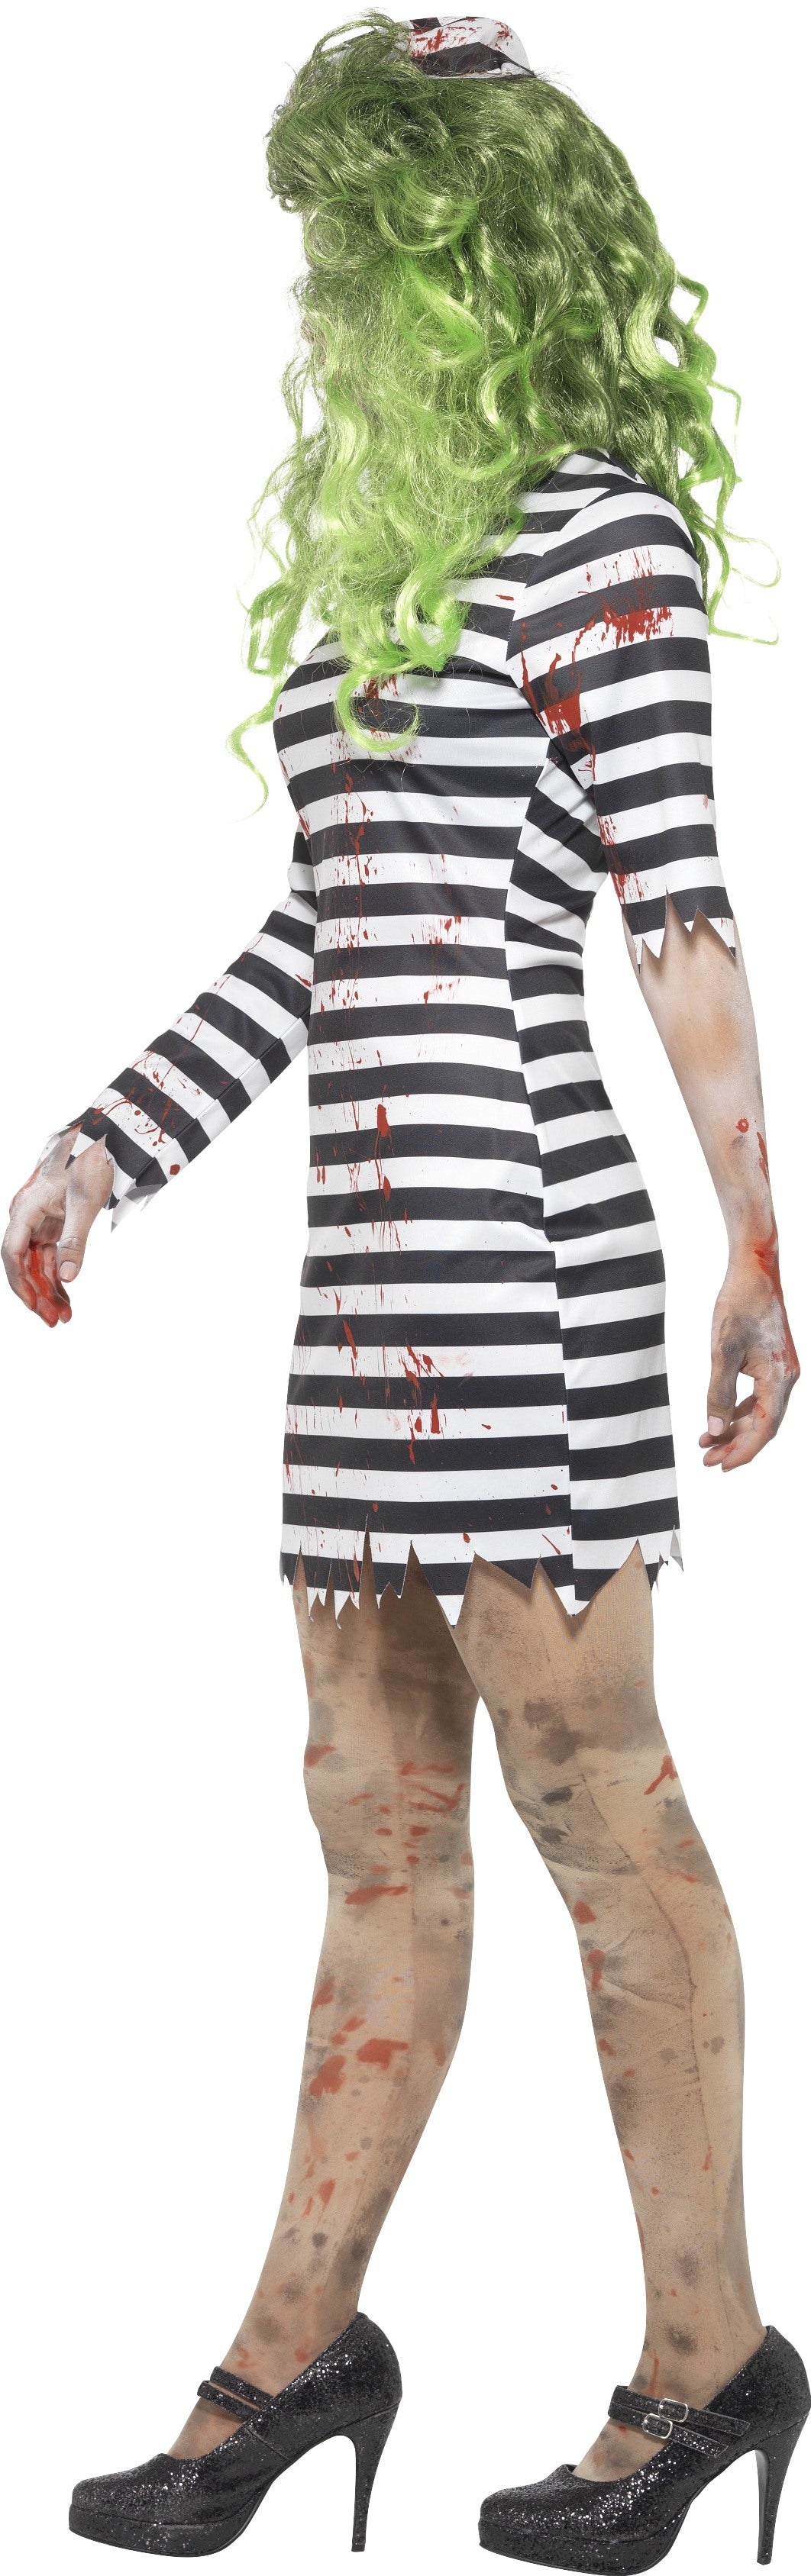 Terrifying Zombie Jail Bird Ladies Costume